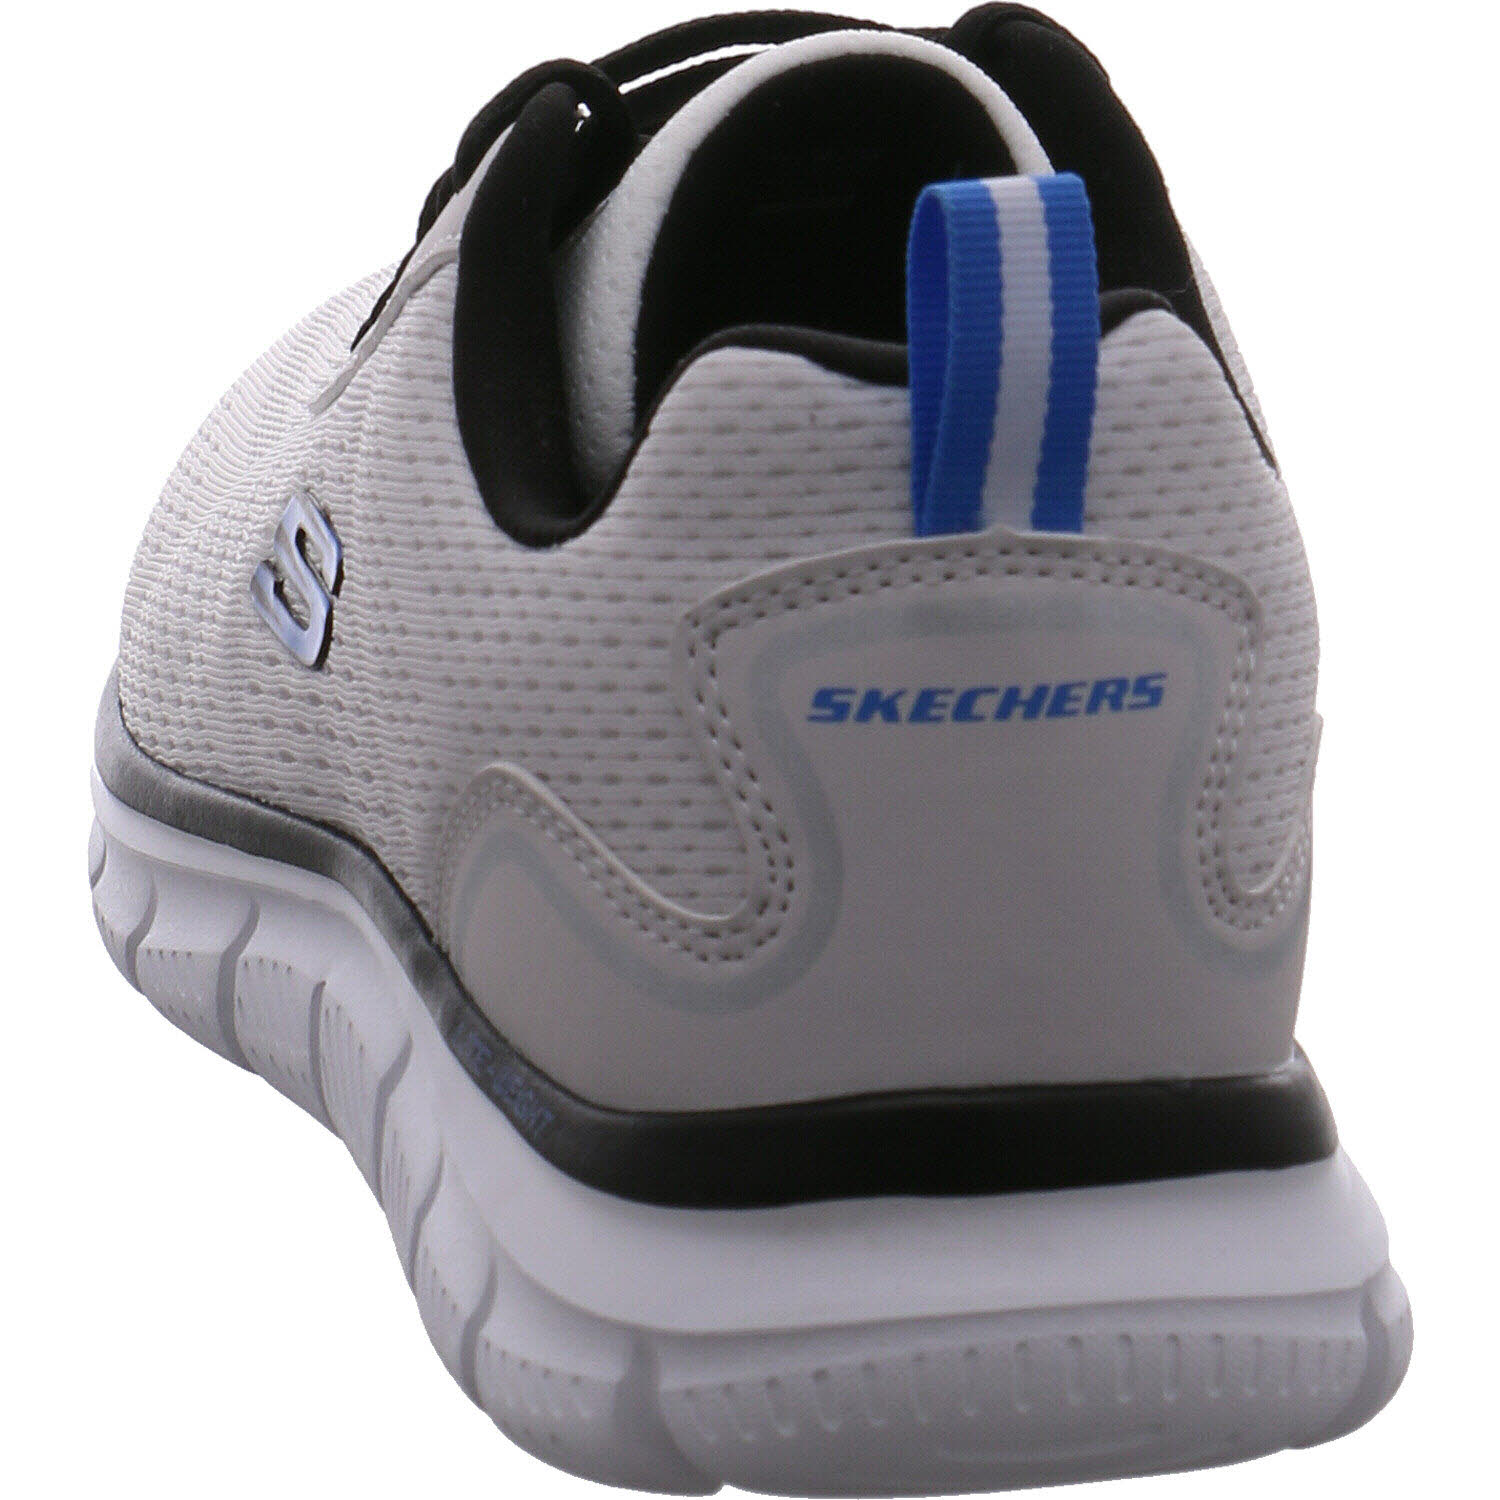 Skechers Sneaker low track ripkent